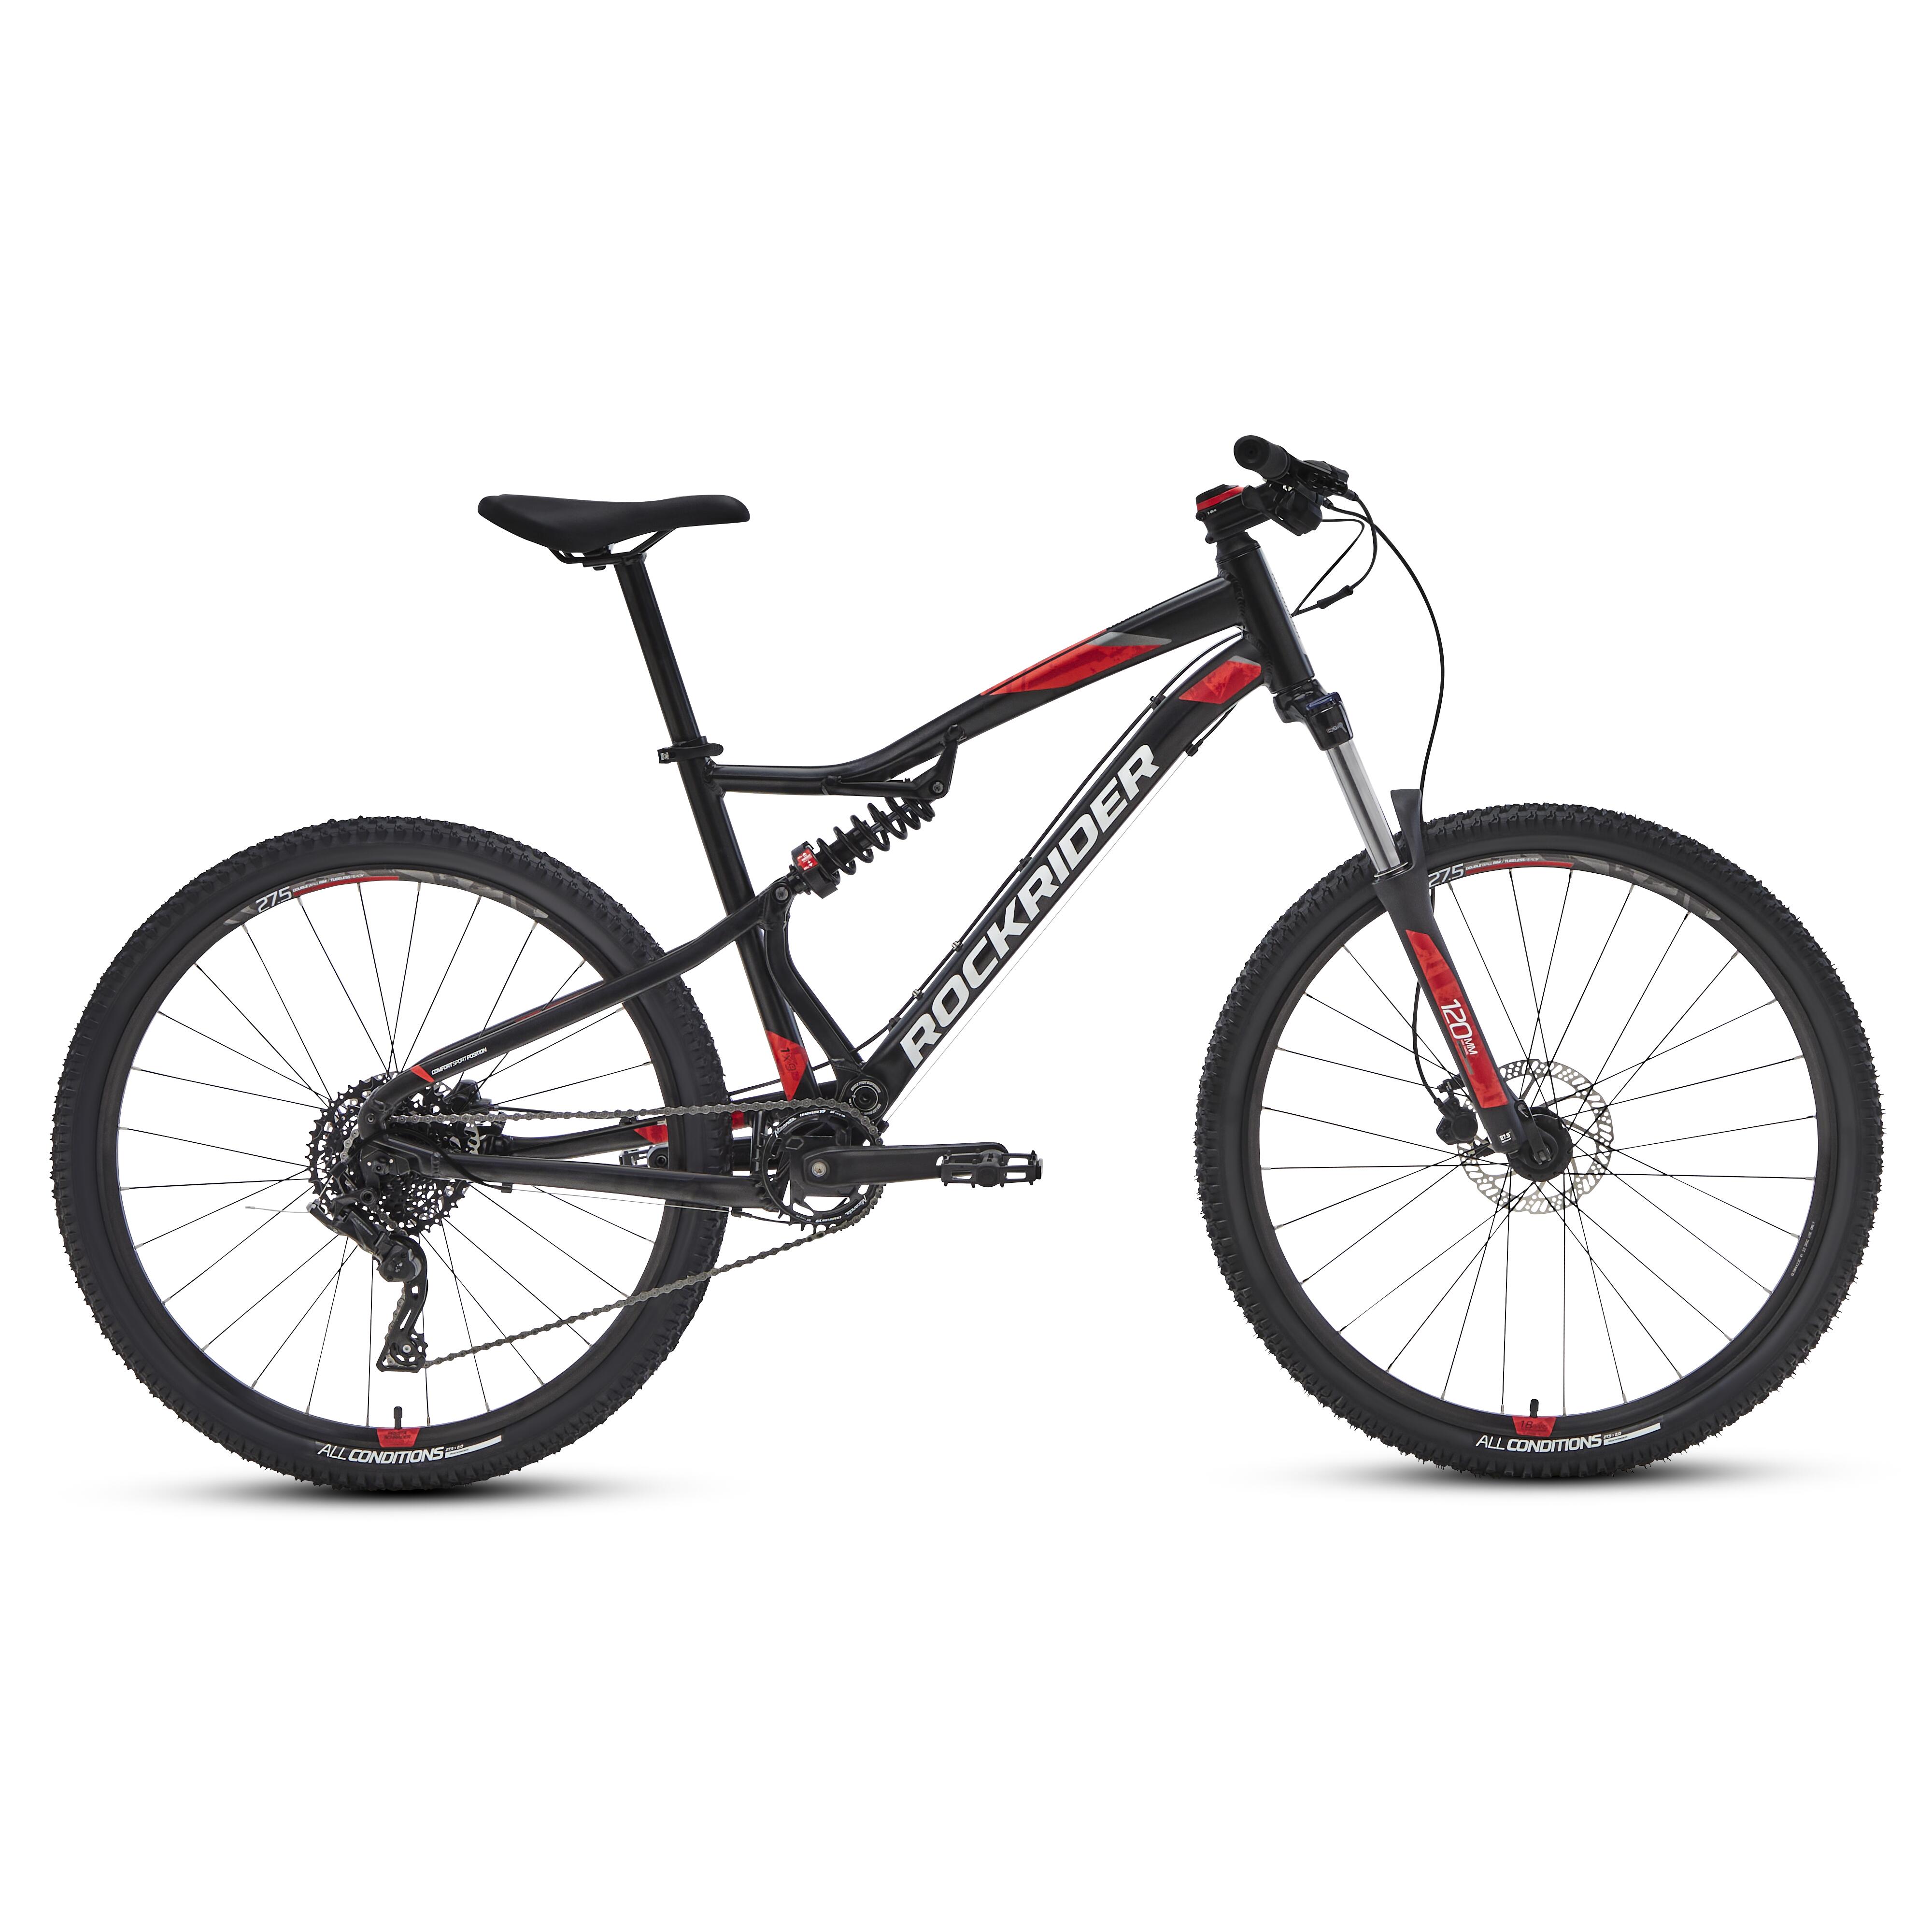 Bicicletă MTB ST 530 S 27,5″ Negru-Roșu La Oferta Online decathlon imagine La Oferta Online